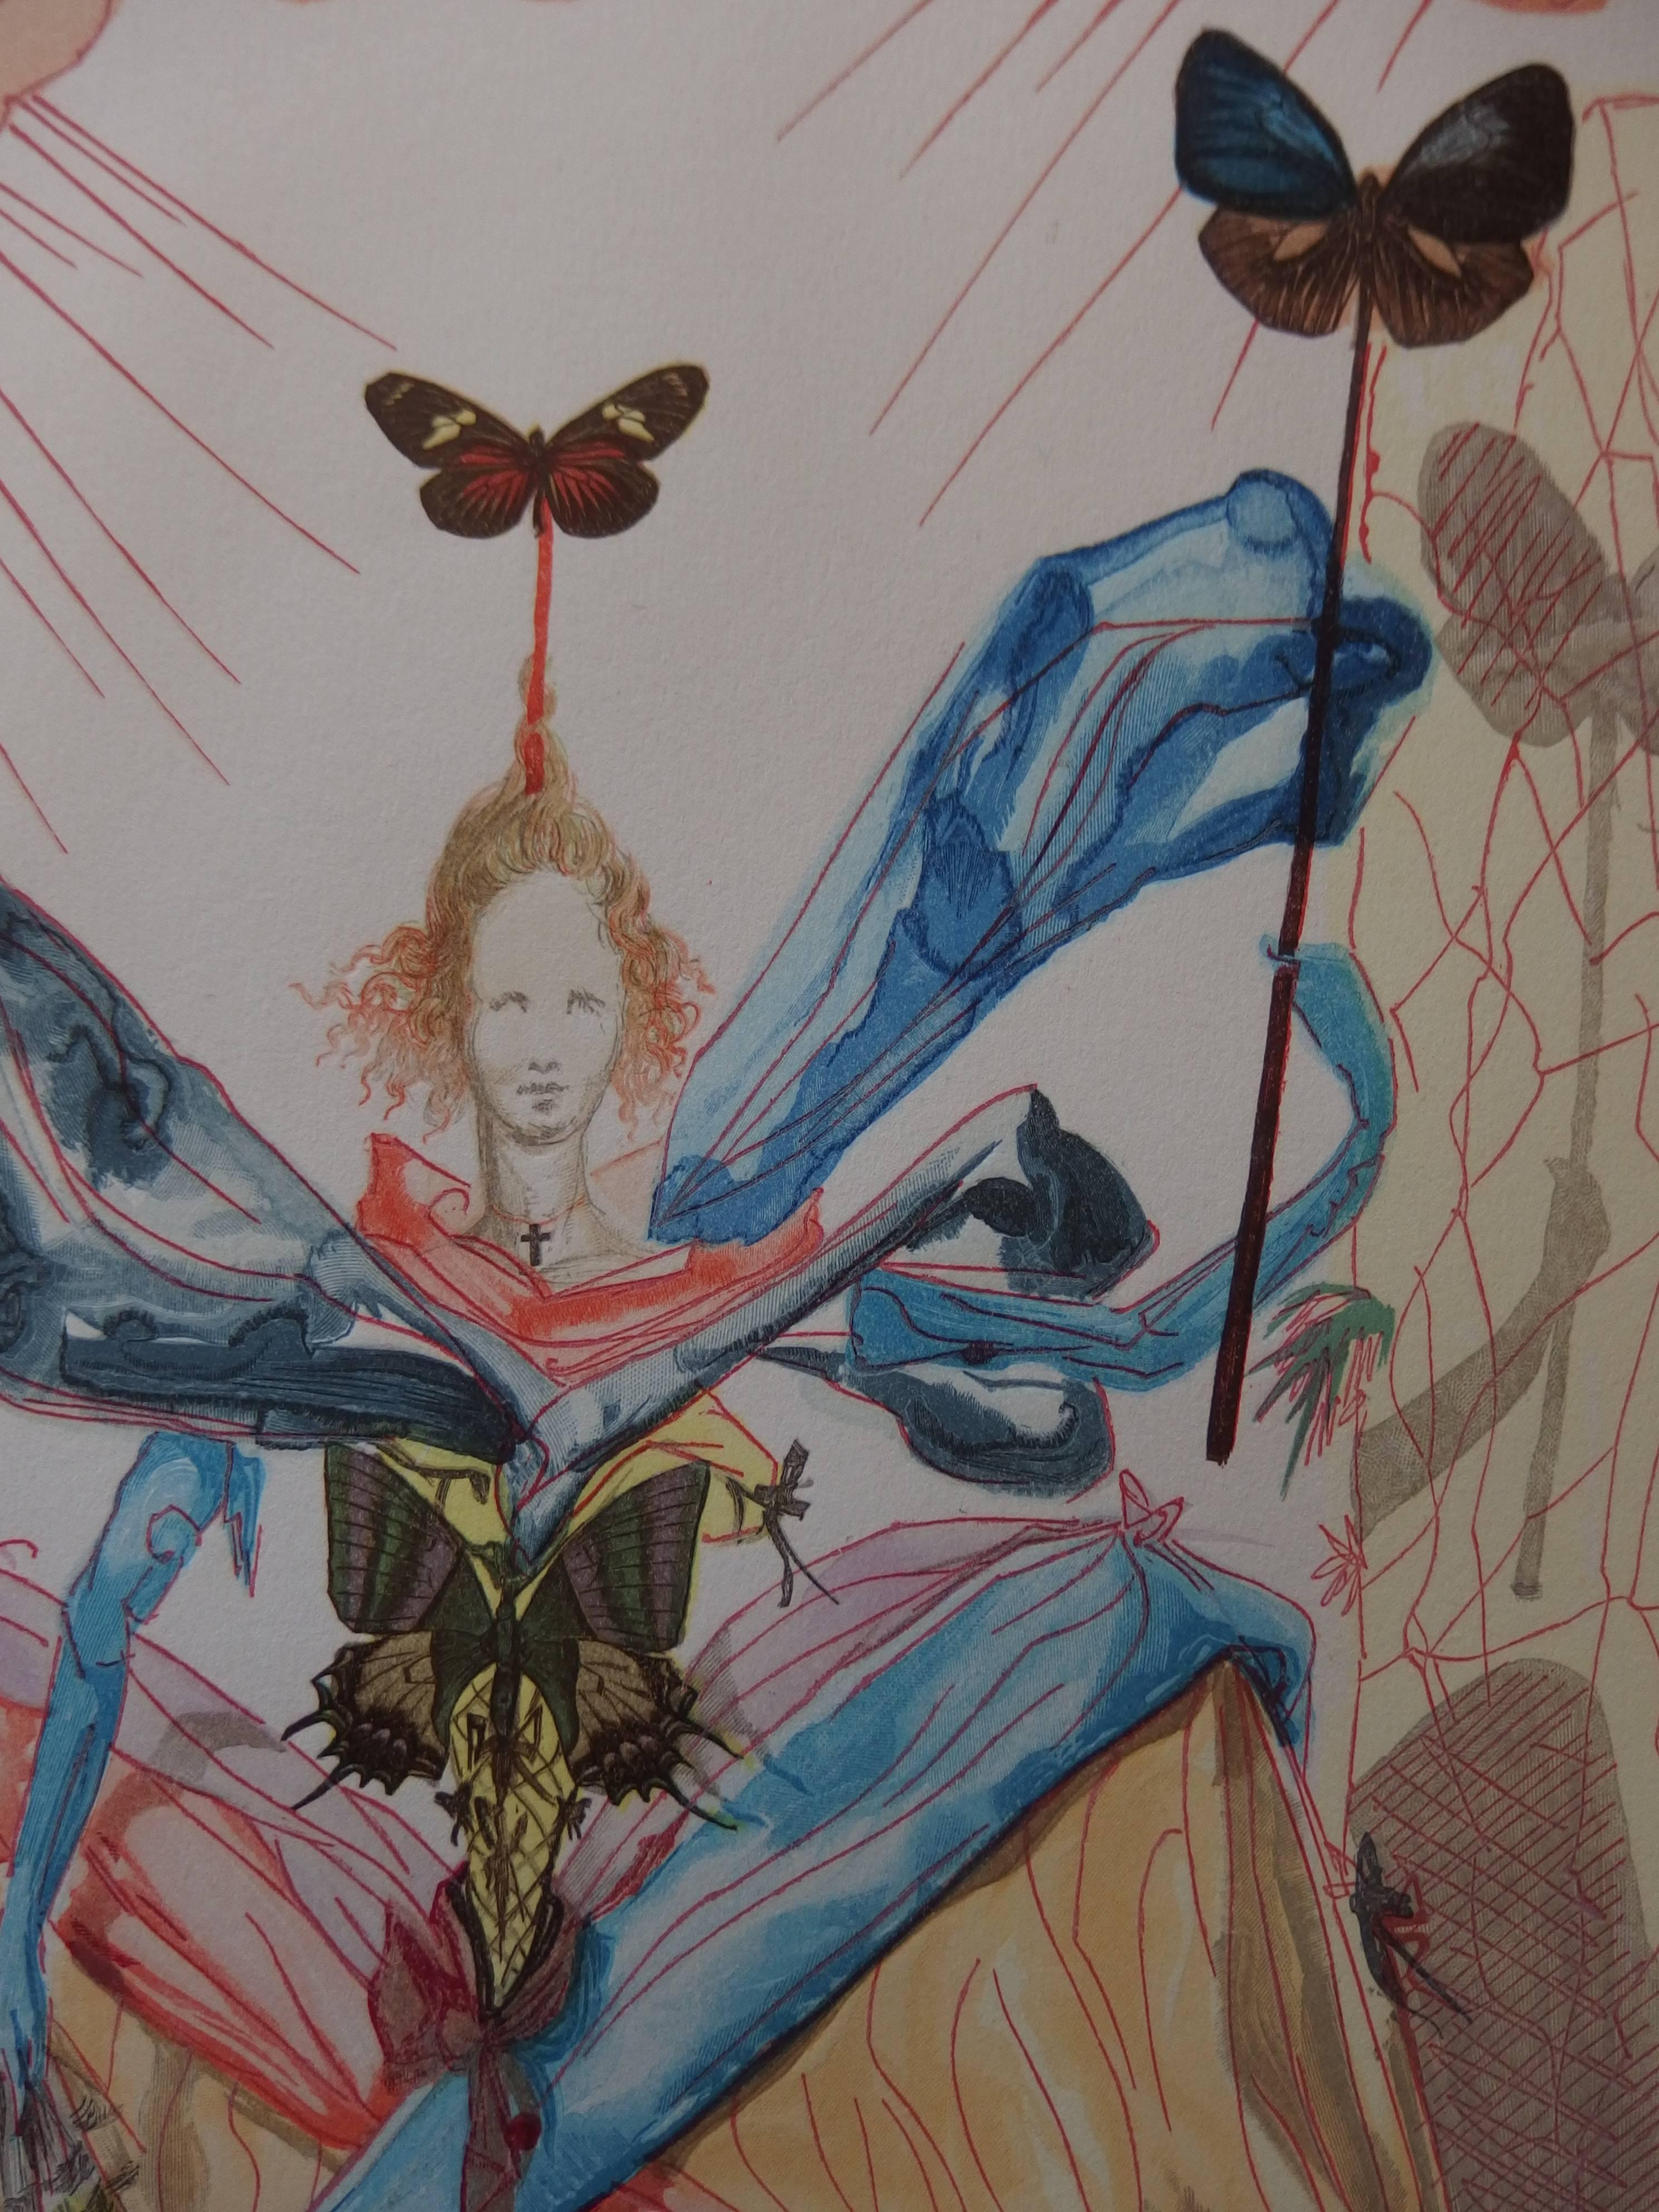 Salvador DALI
Tricorne : Woman with Butterflies (1959)

Original woodcut print
Signed in the plate
On Hollande (Van Gelder) Vellum
Size 32 x 25.5 cm (c. 13 x 10